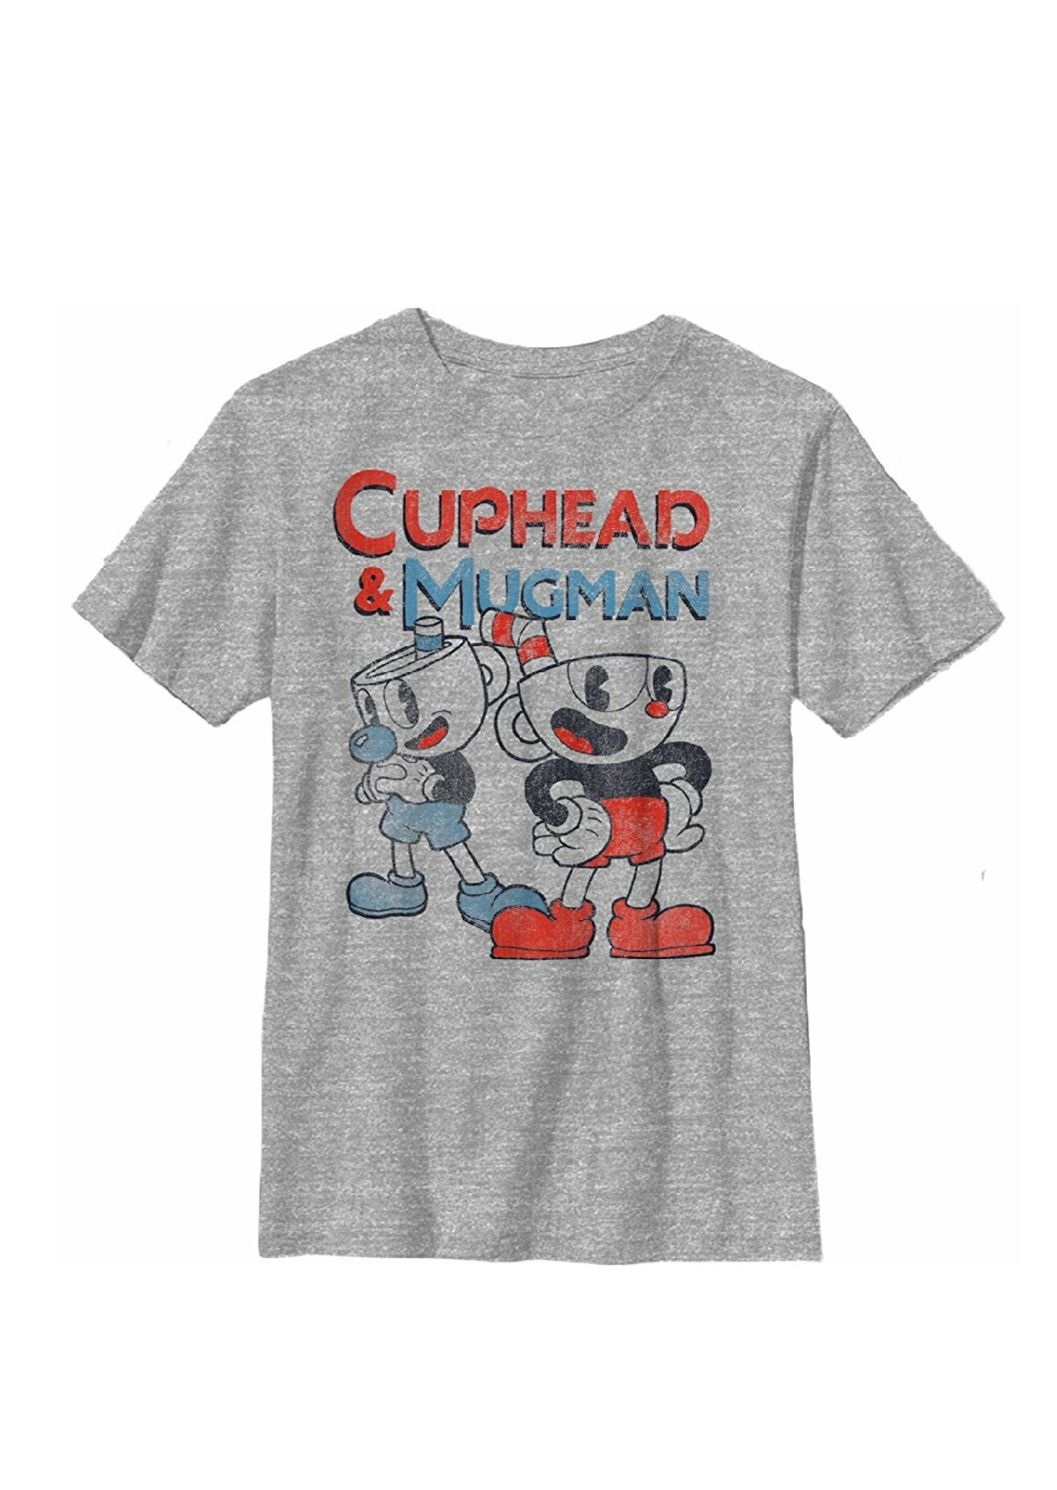 Cuphead & Krugman T-shirt